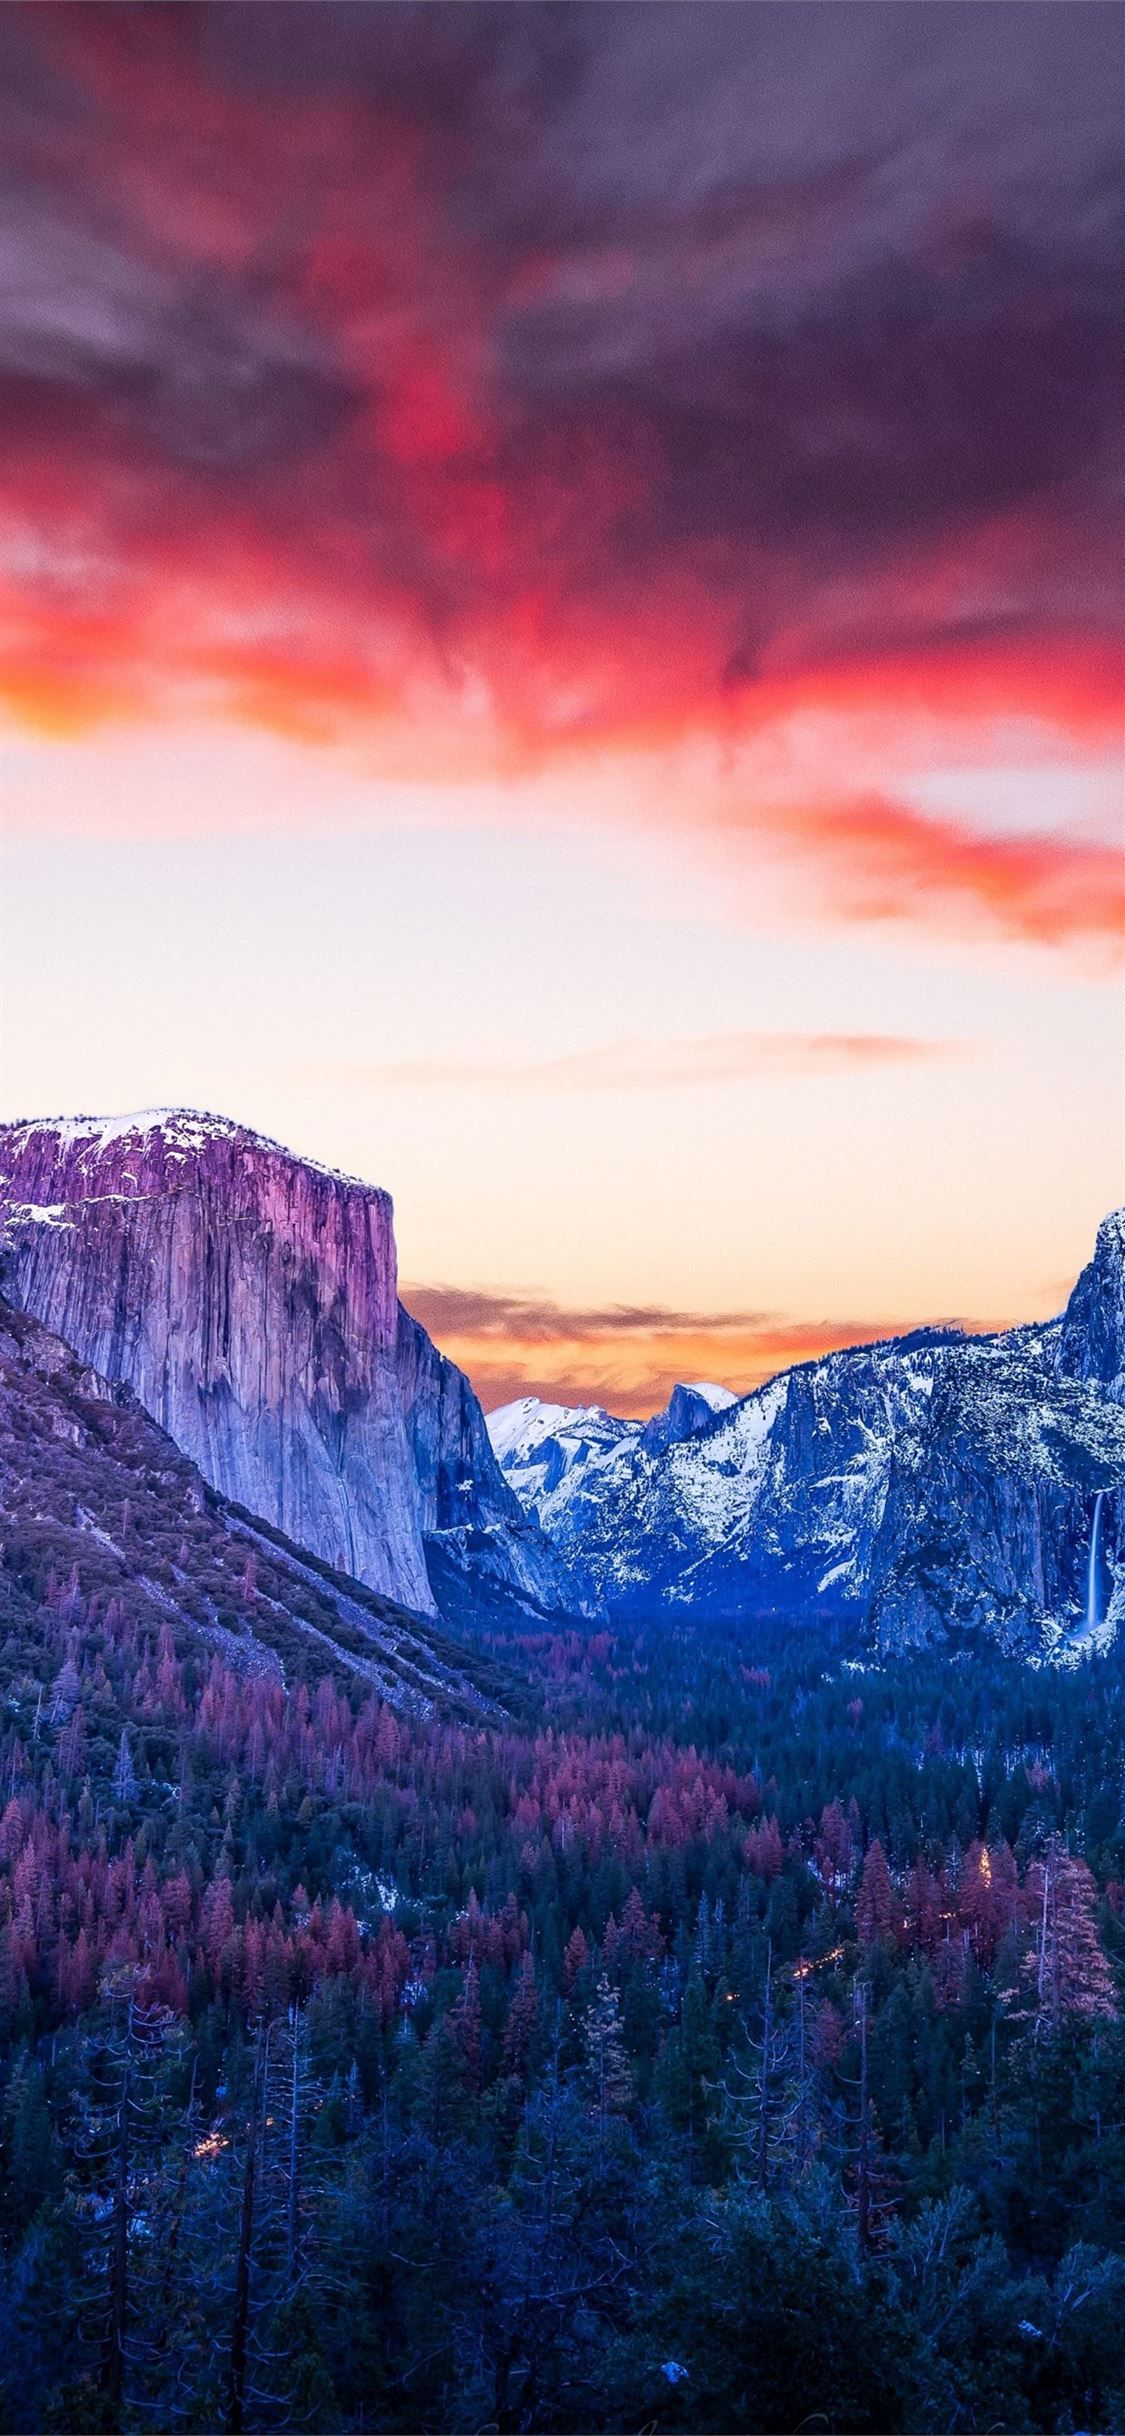 Yosemite Valley iPhone X Wallpaper .ilikewallpaper.net